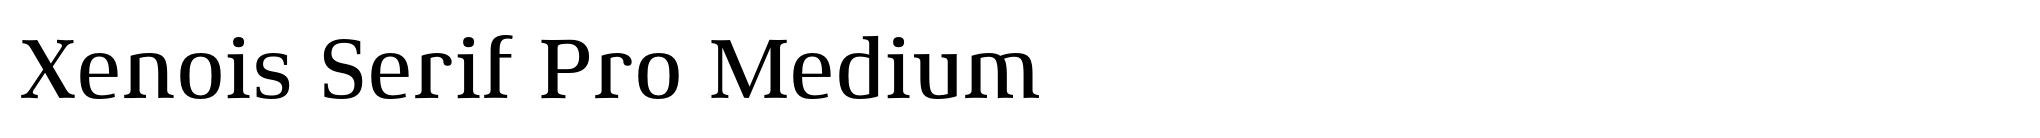 Xenois Serif Pro Medium image